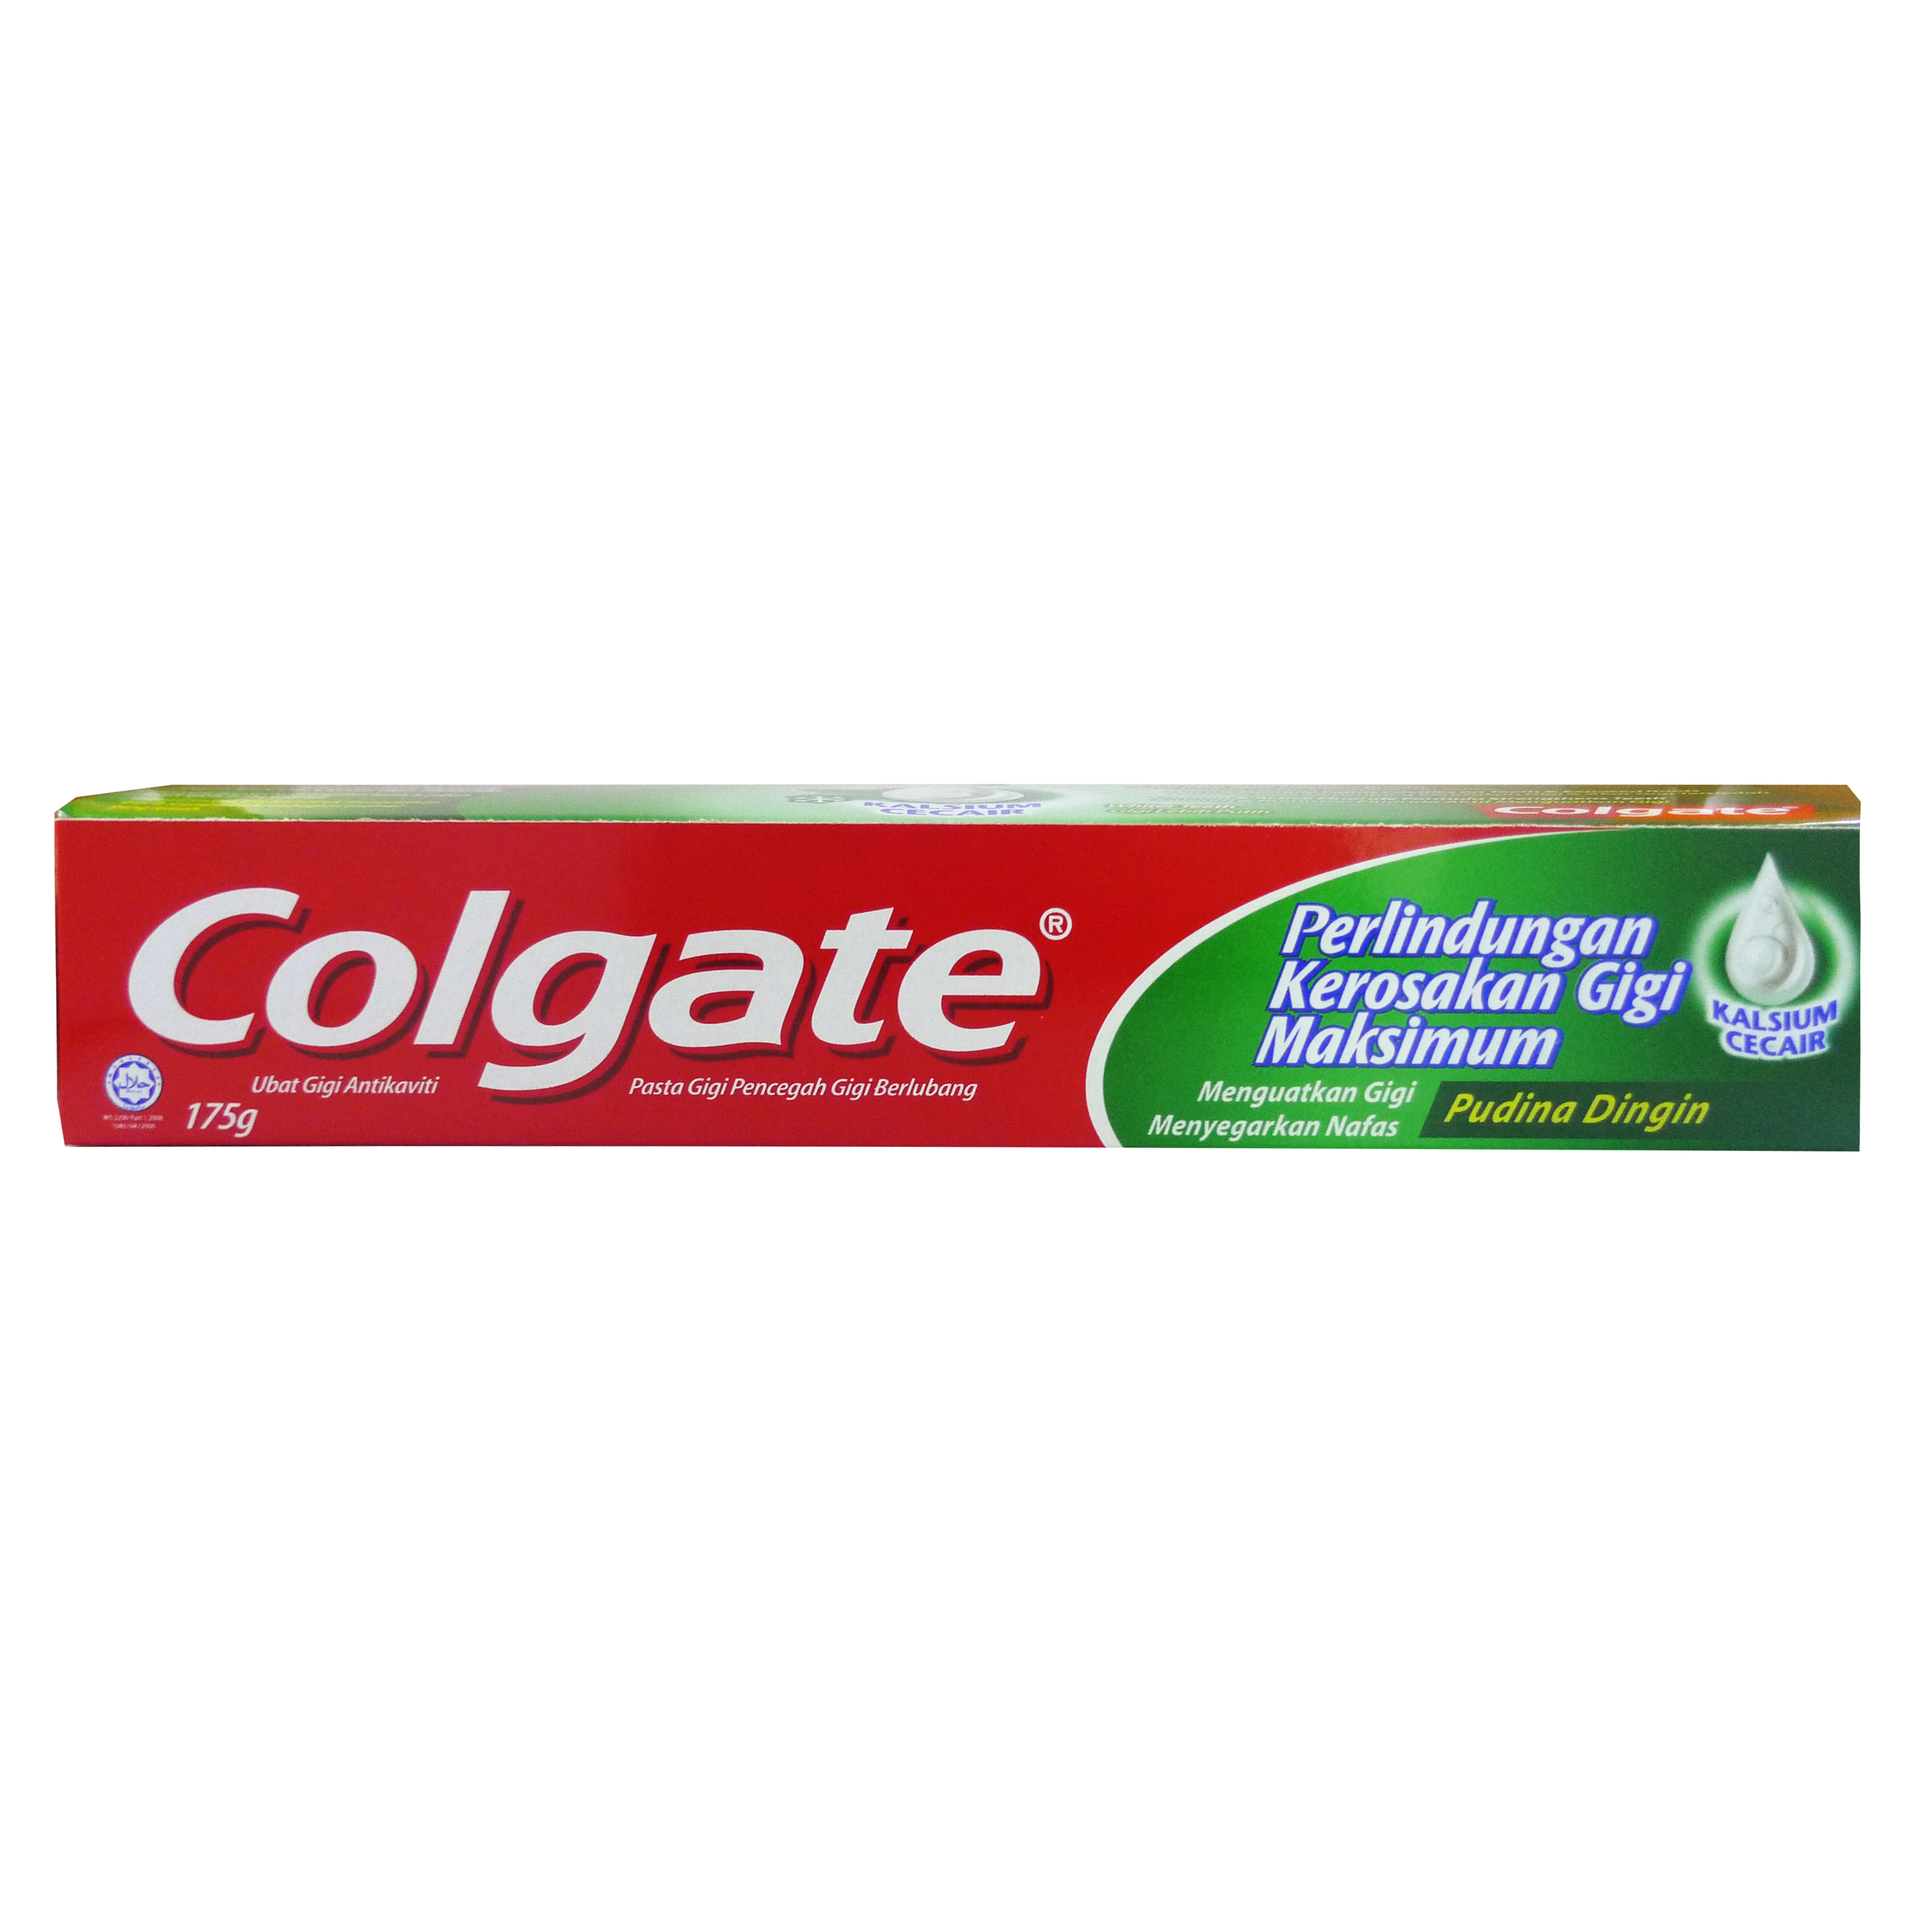 Colgate Toothpaste Box175g